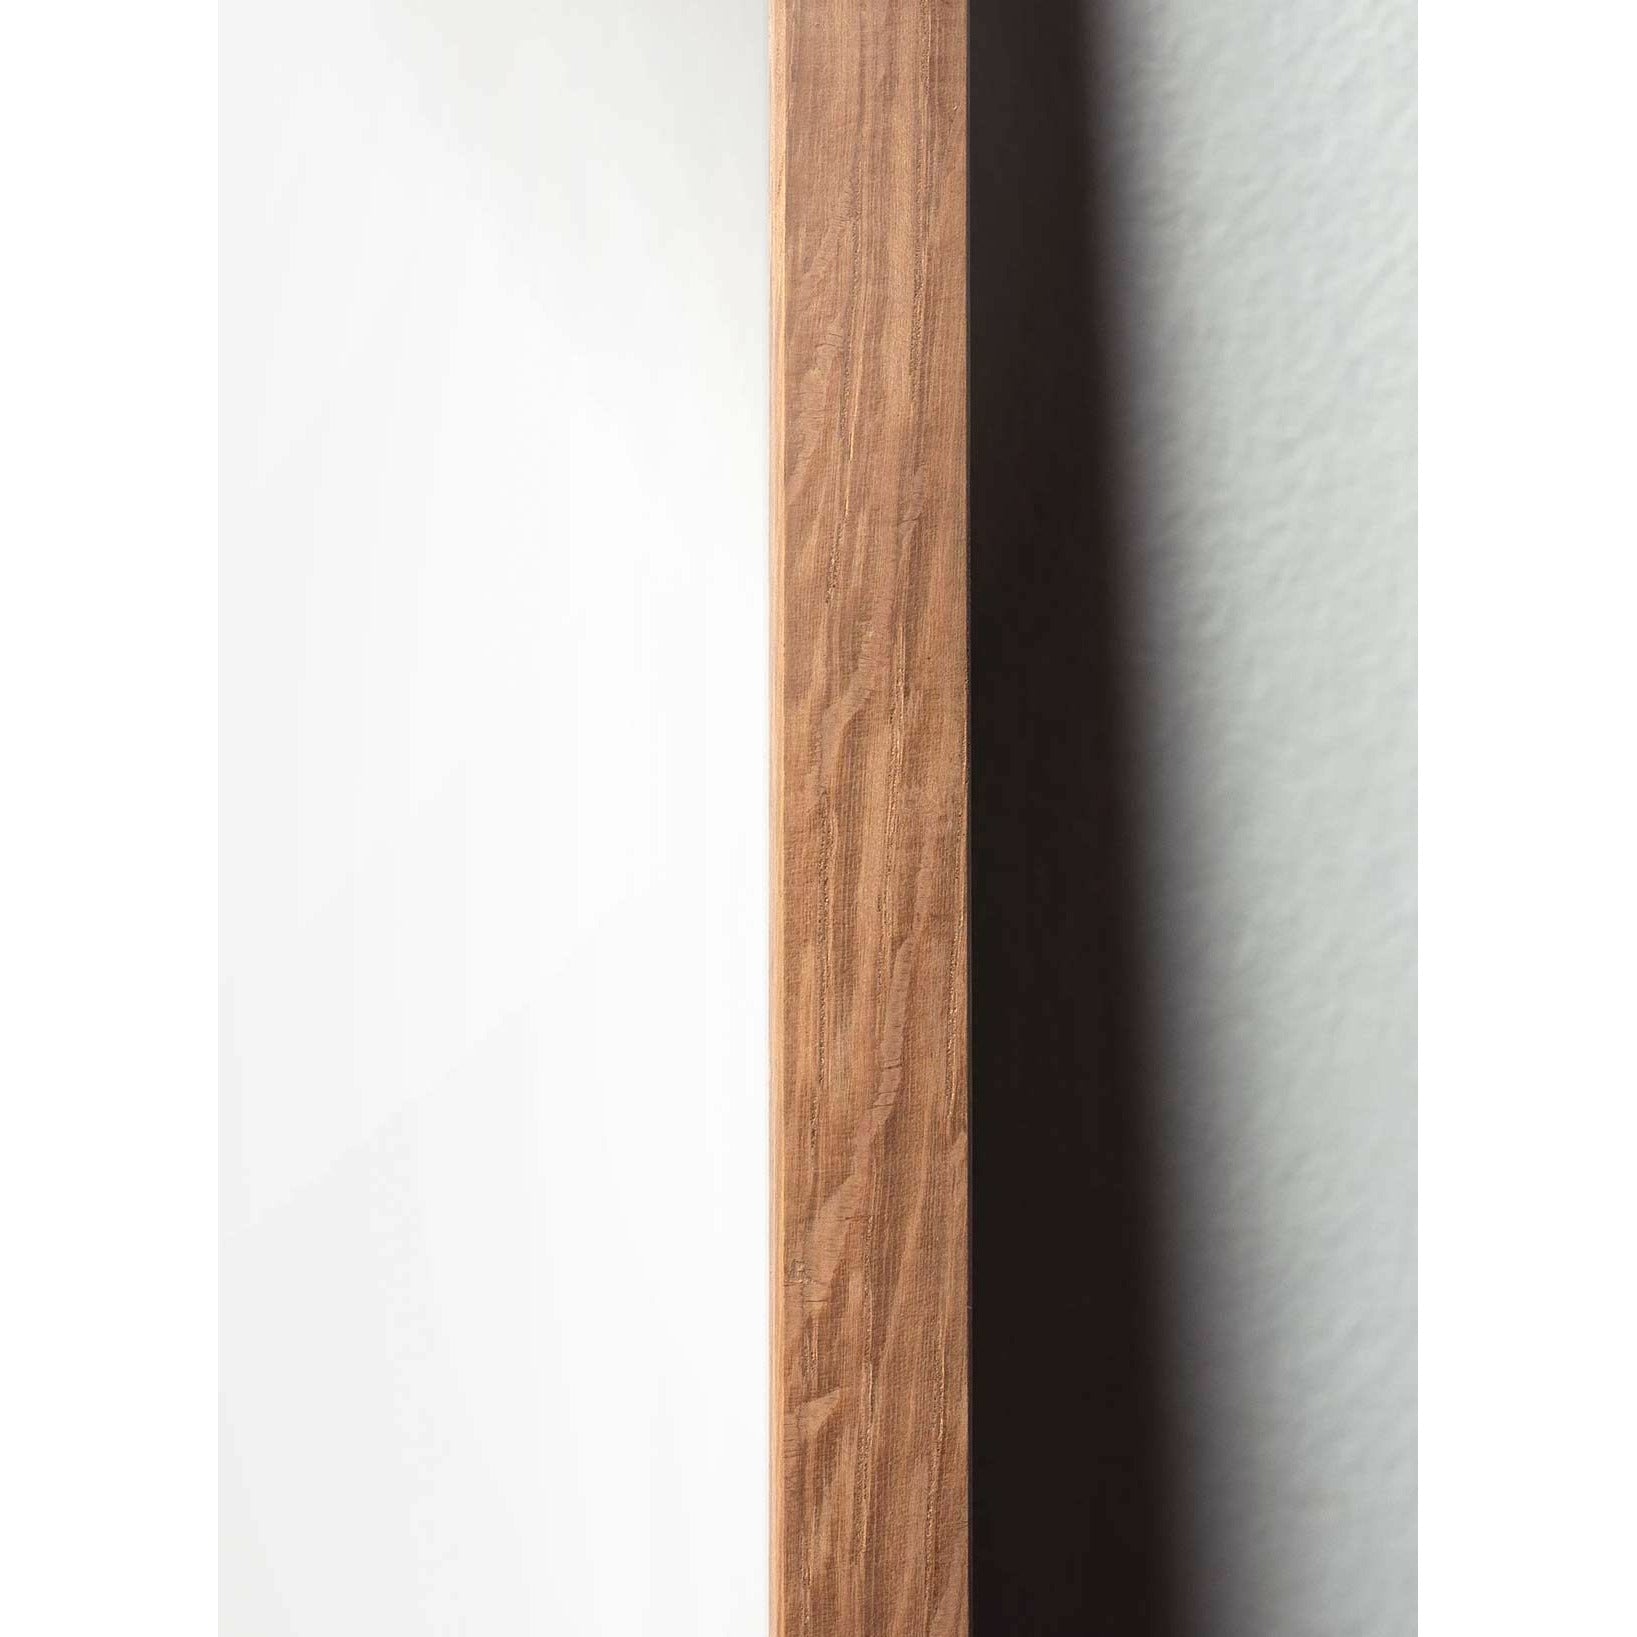 Brainchild Äggfigursaffisch, ram i lätt trä 50x70 cm, brunt